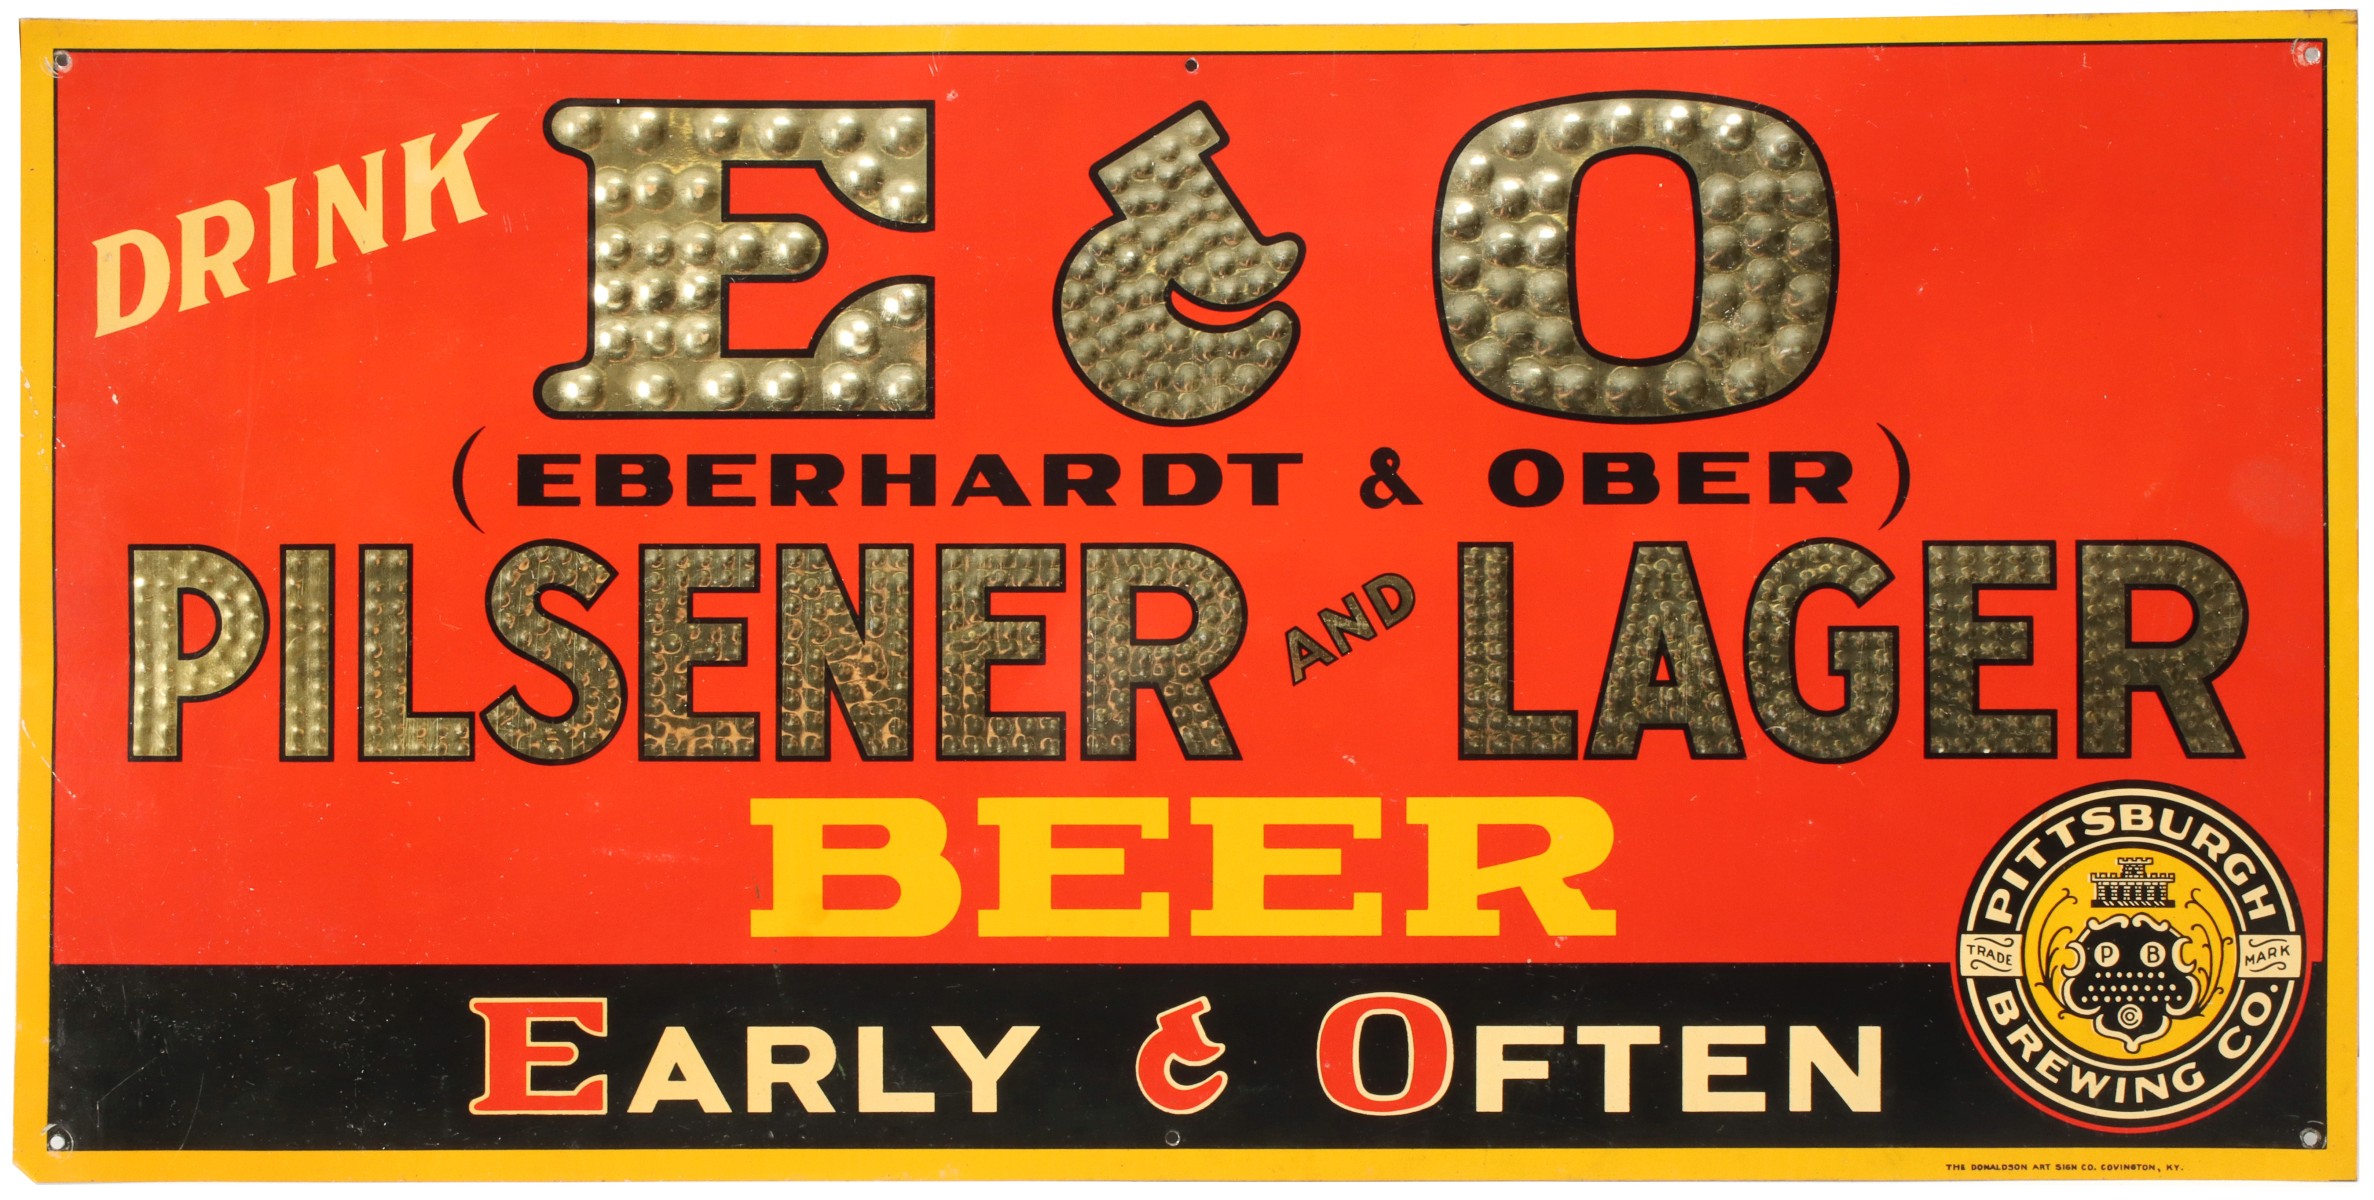 EBERHARDT & OBER BEER 'EARLY & OFTEN' ADVERTISING SIGN